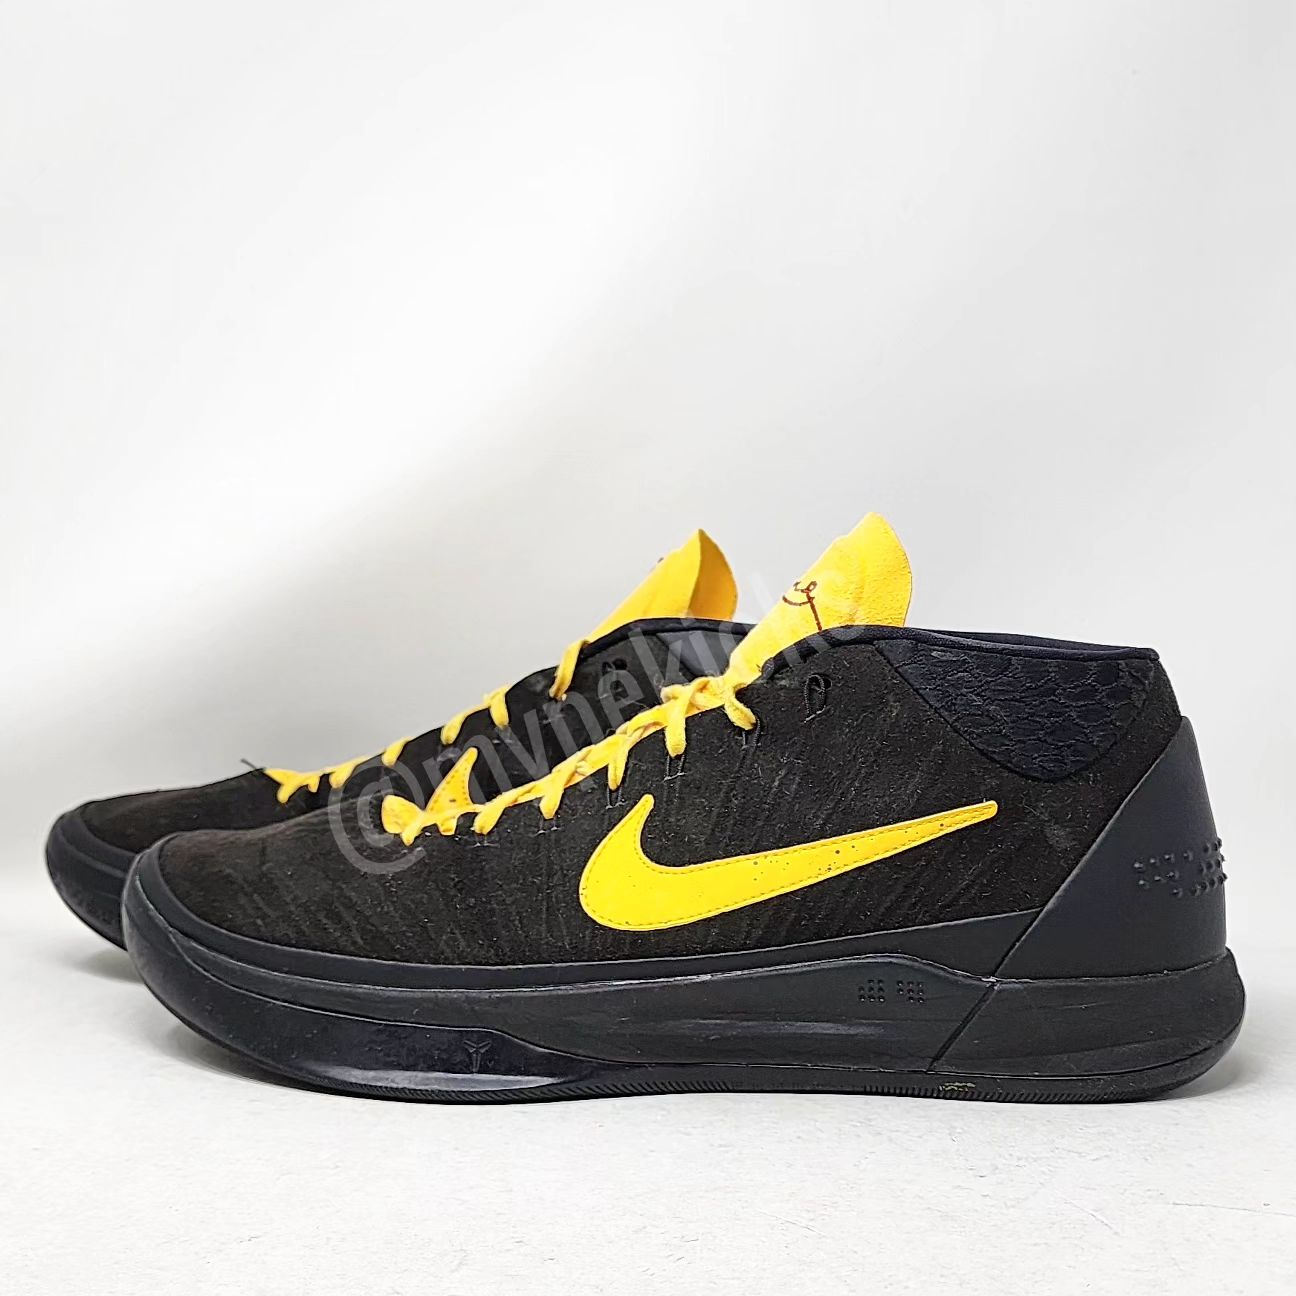 Nike Kobe A.D. Mid PE (worn by Kobe Bryant)